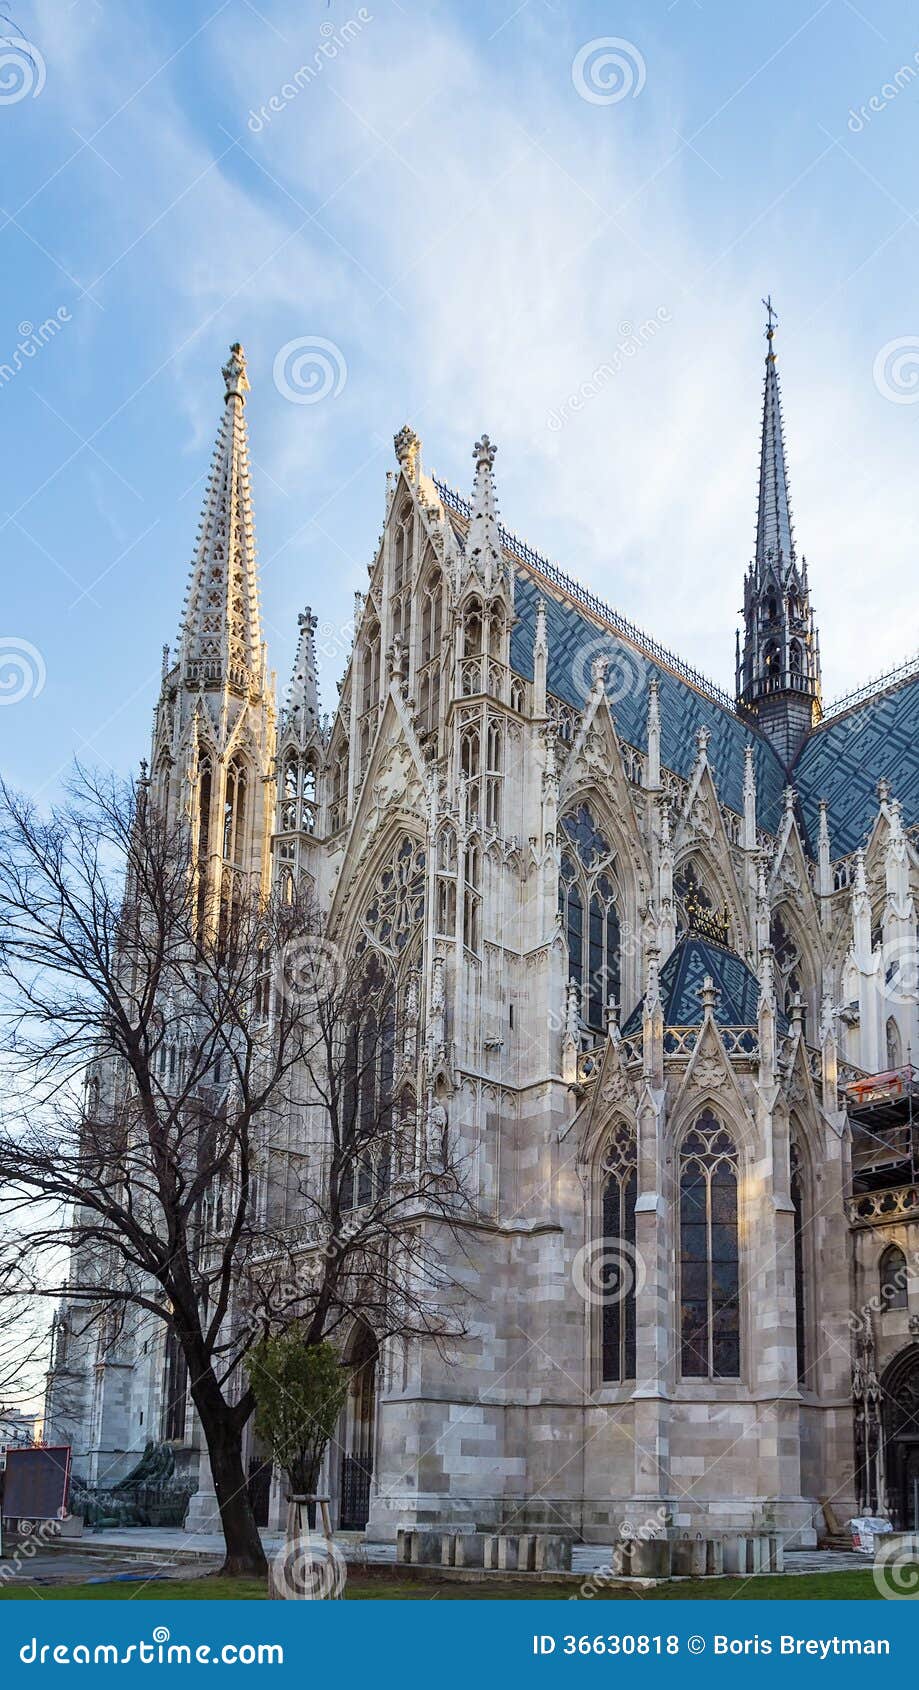 Iglesia votiva, Viena. La iglesia votiva es una iglesia neogótica situada en el Ringstrasse en Viena, Austria